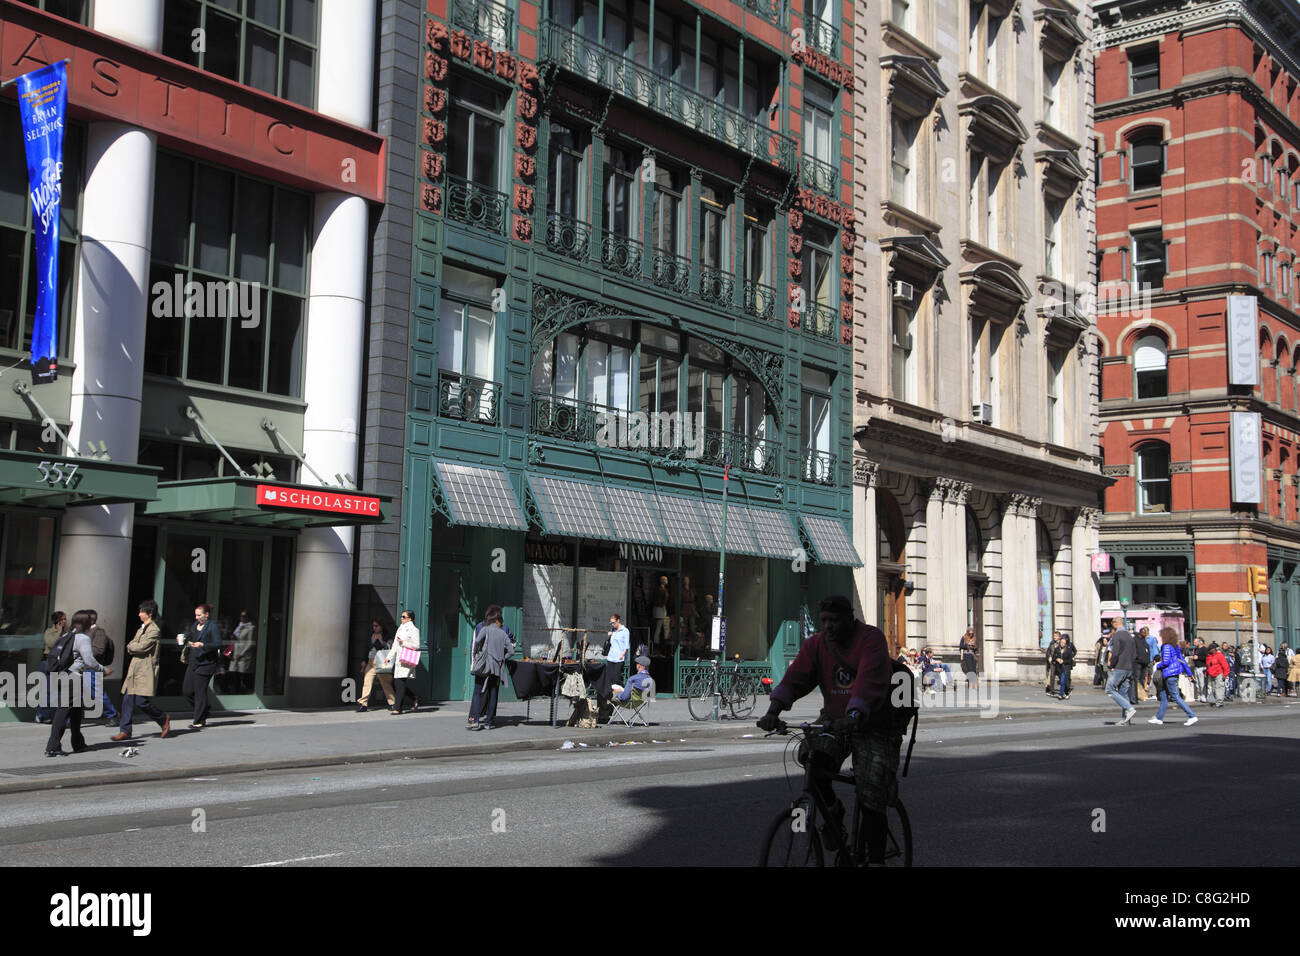 Singer Building, Broadway, Soho, Manhattan, New York City, USA Stock Photo